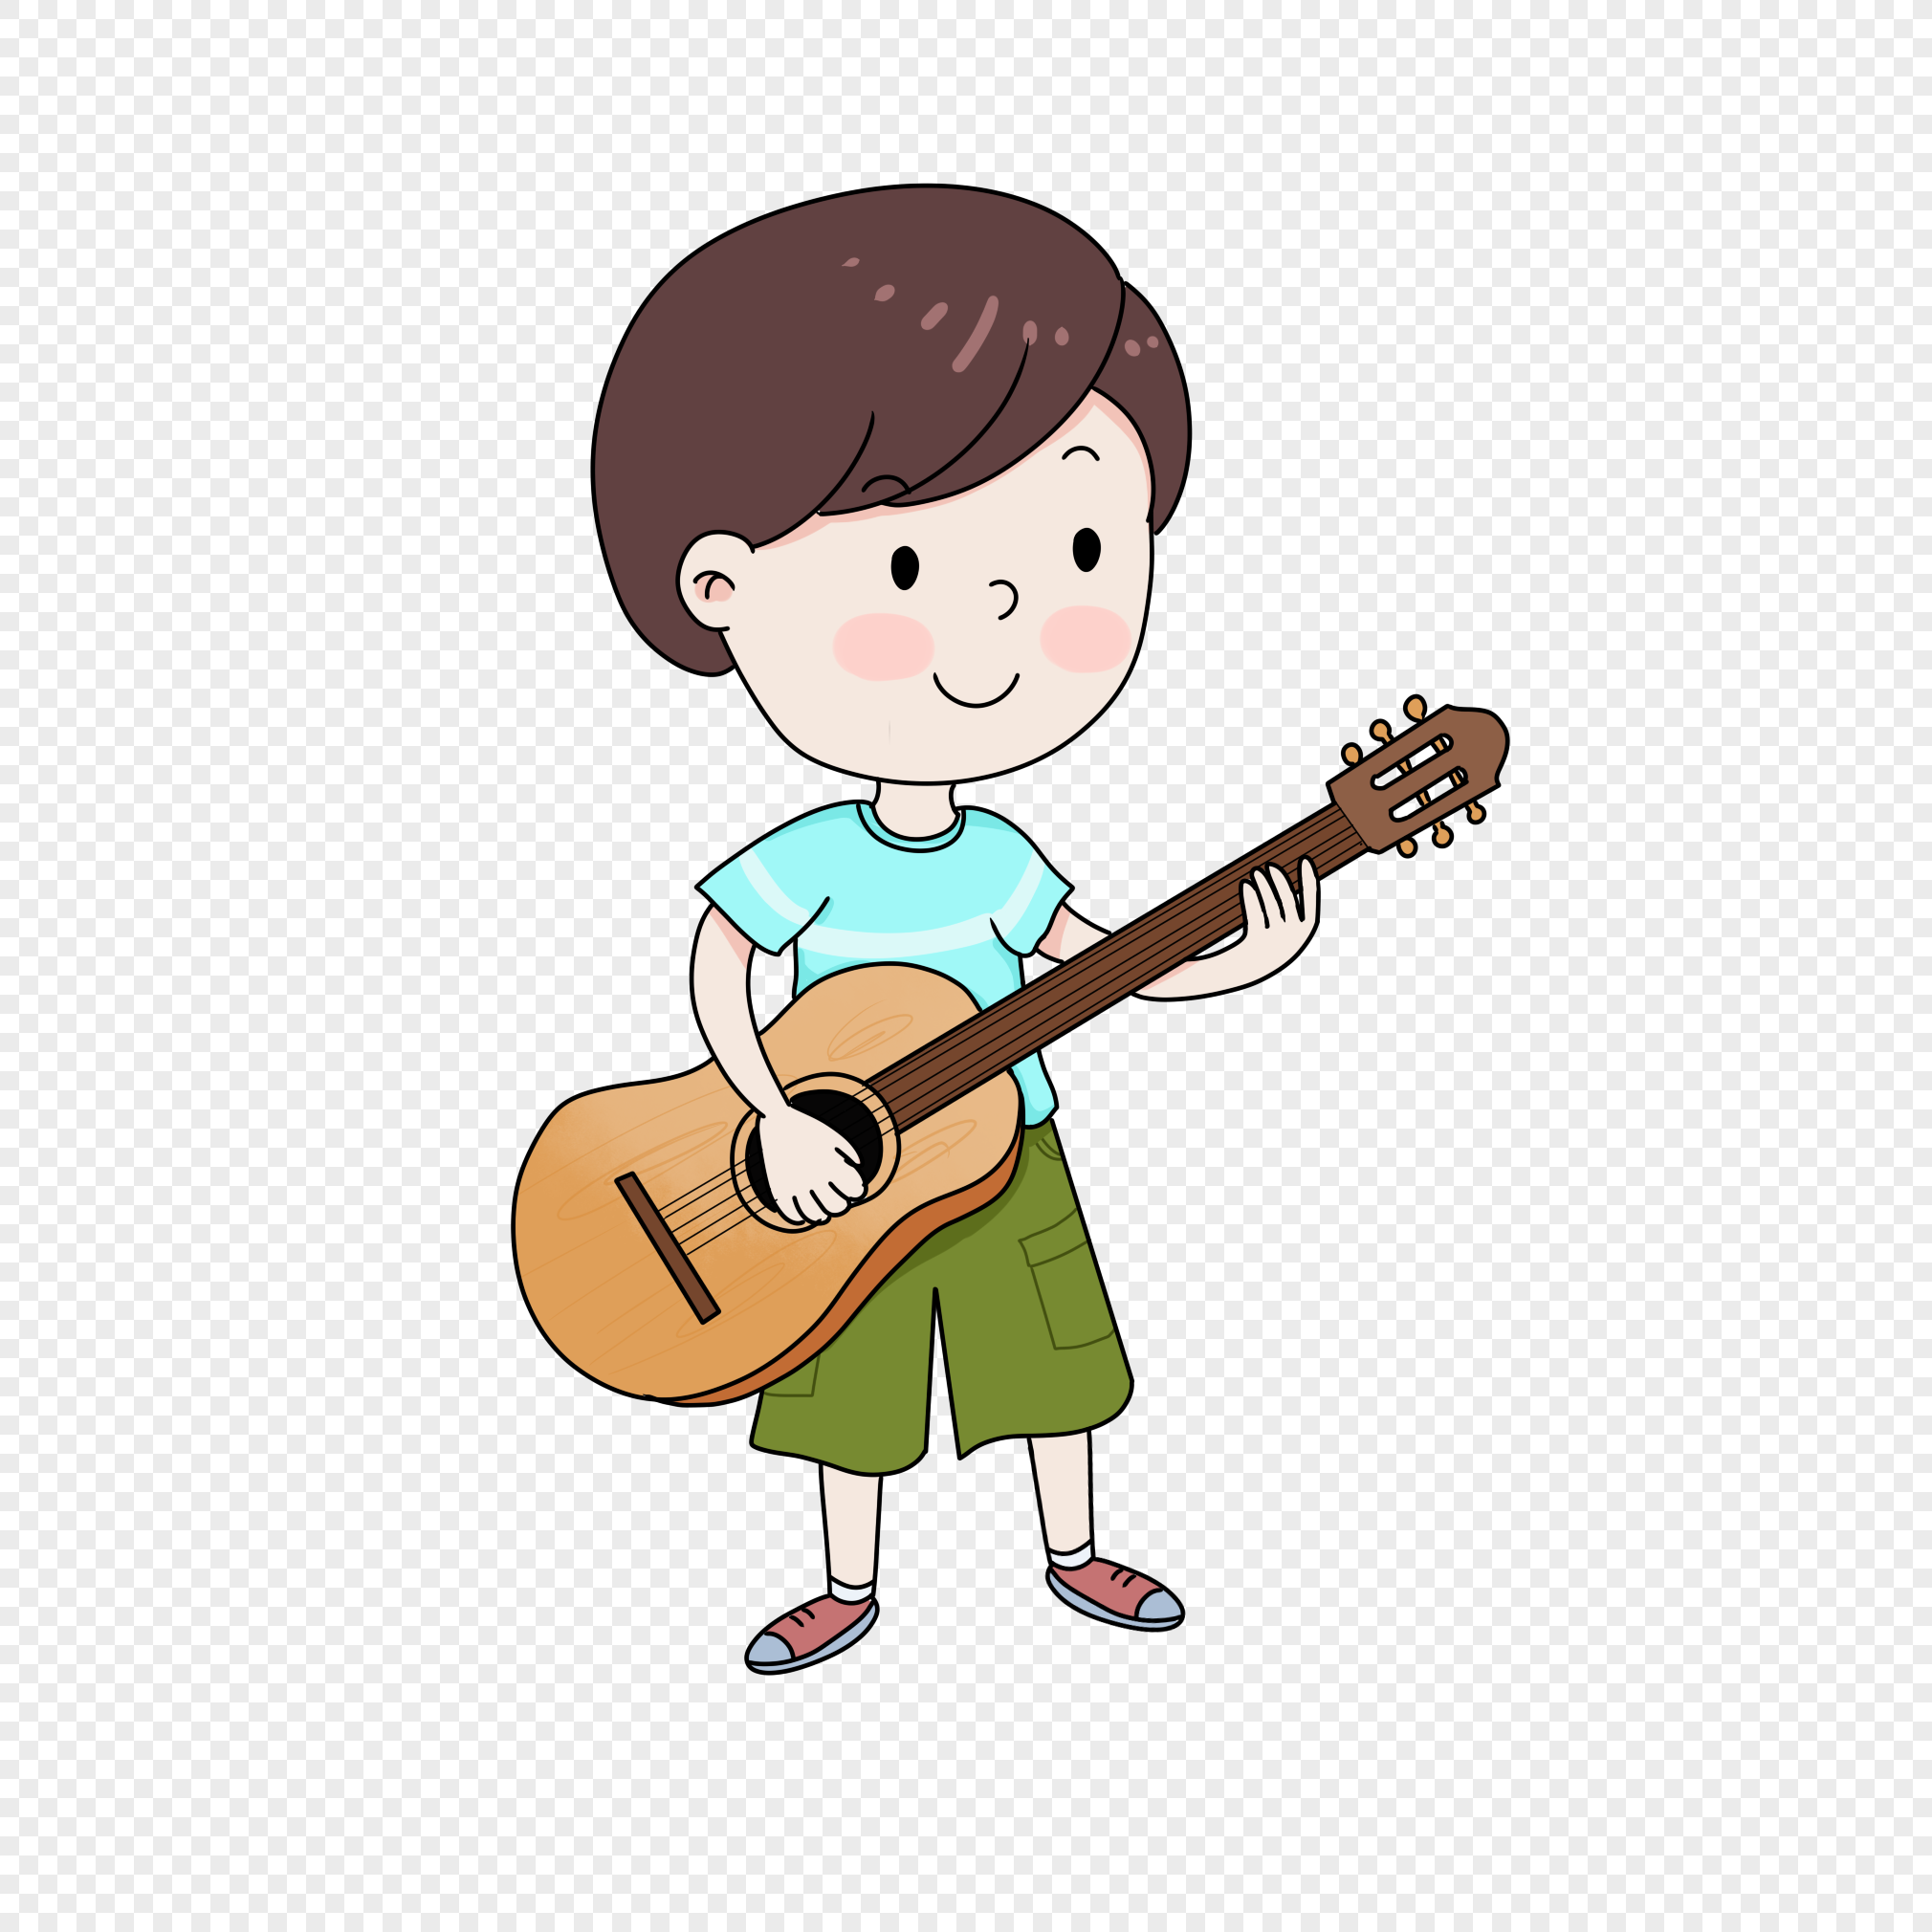  kartun  anak  laki laki bermain  gitar PNG grafik gambar  